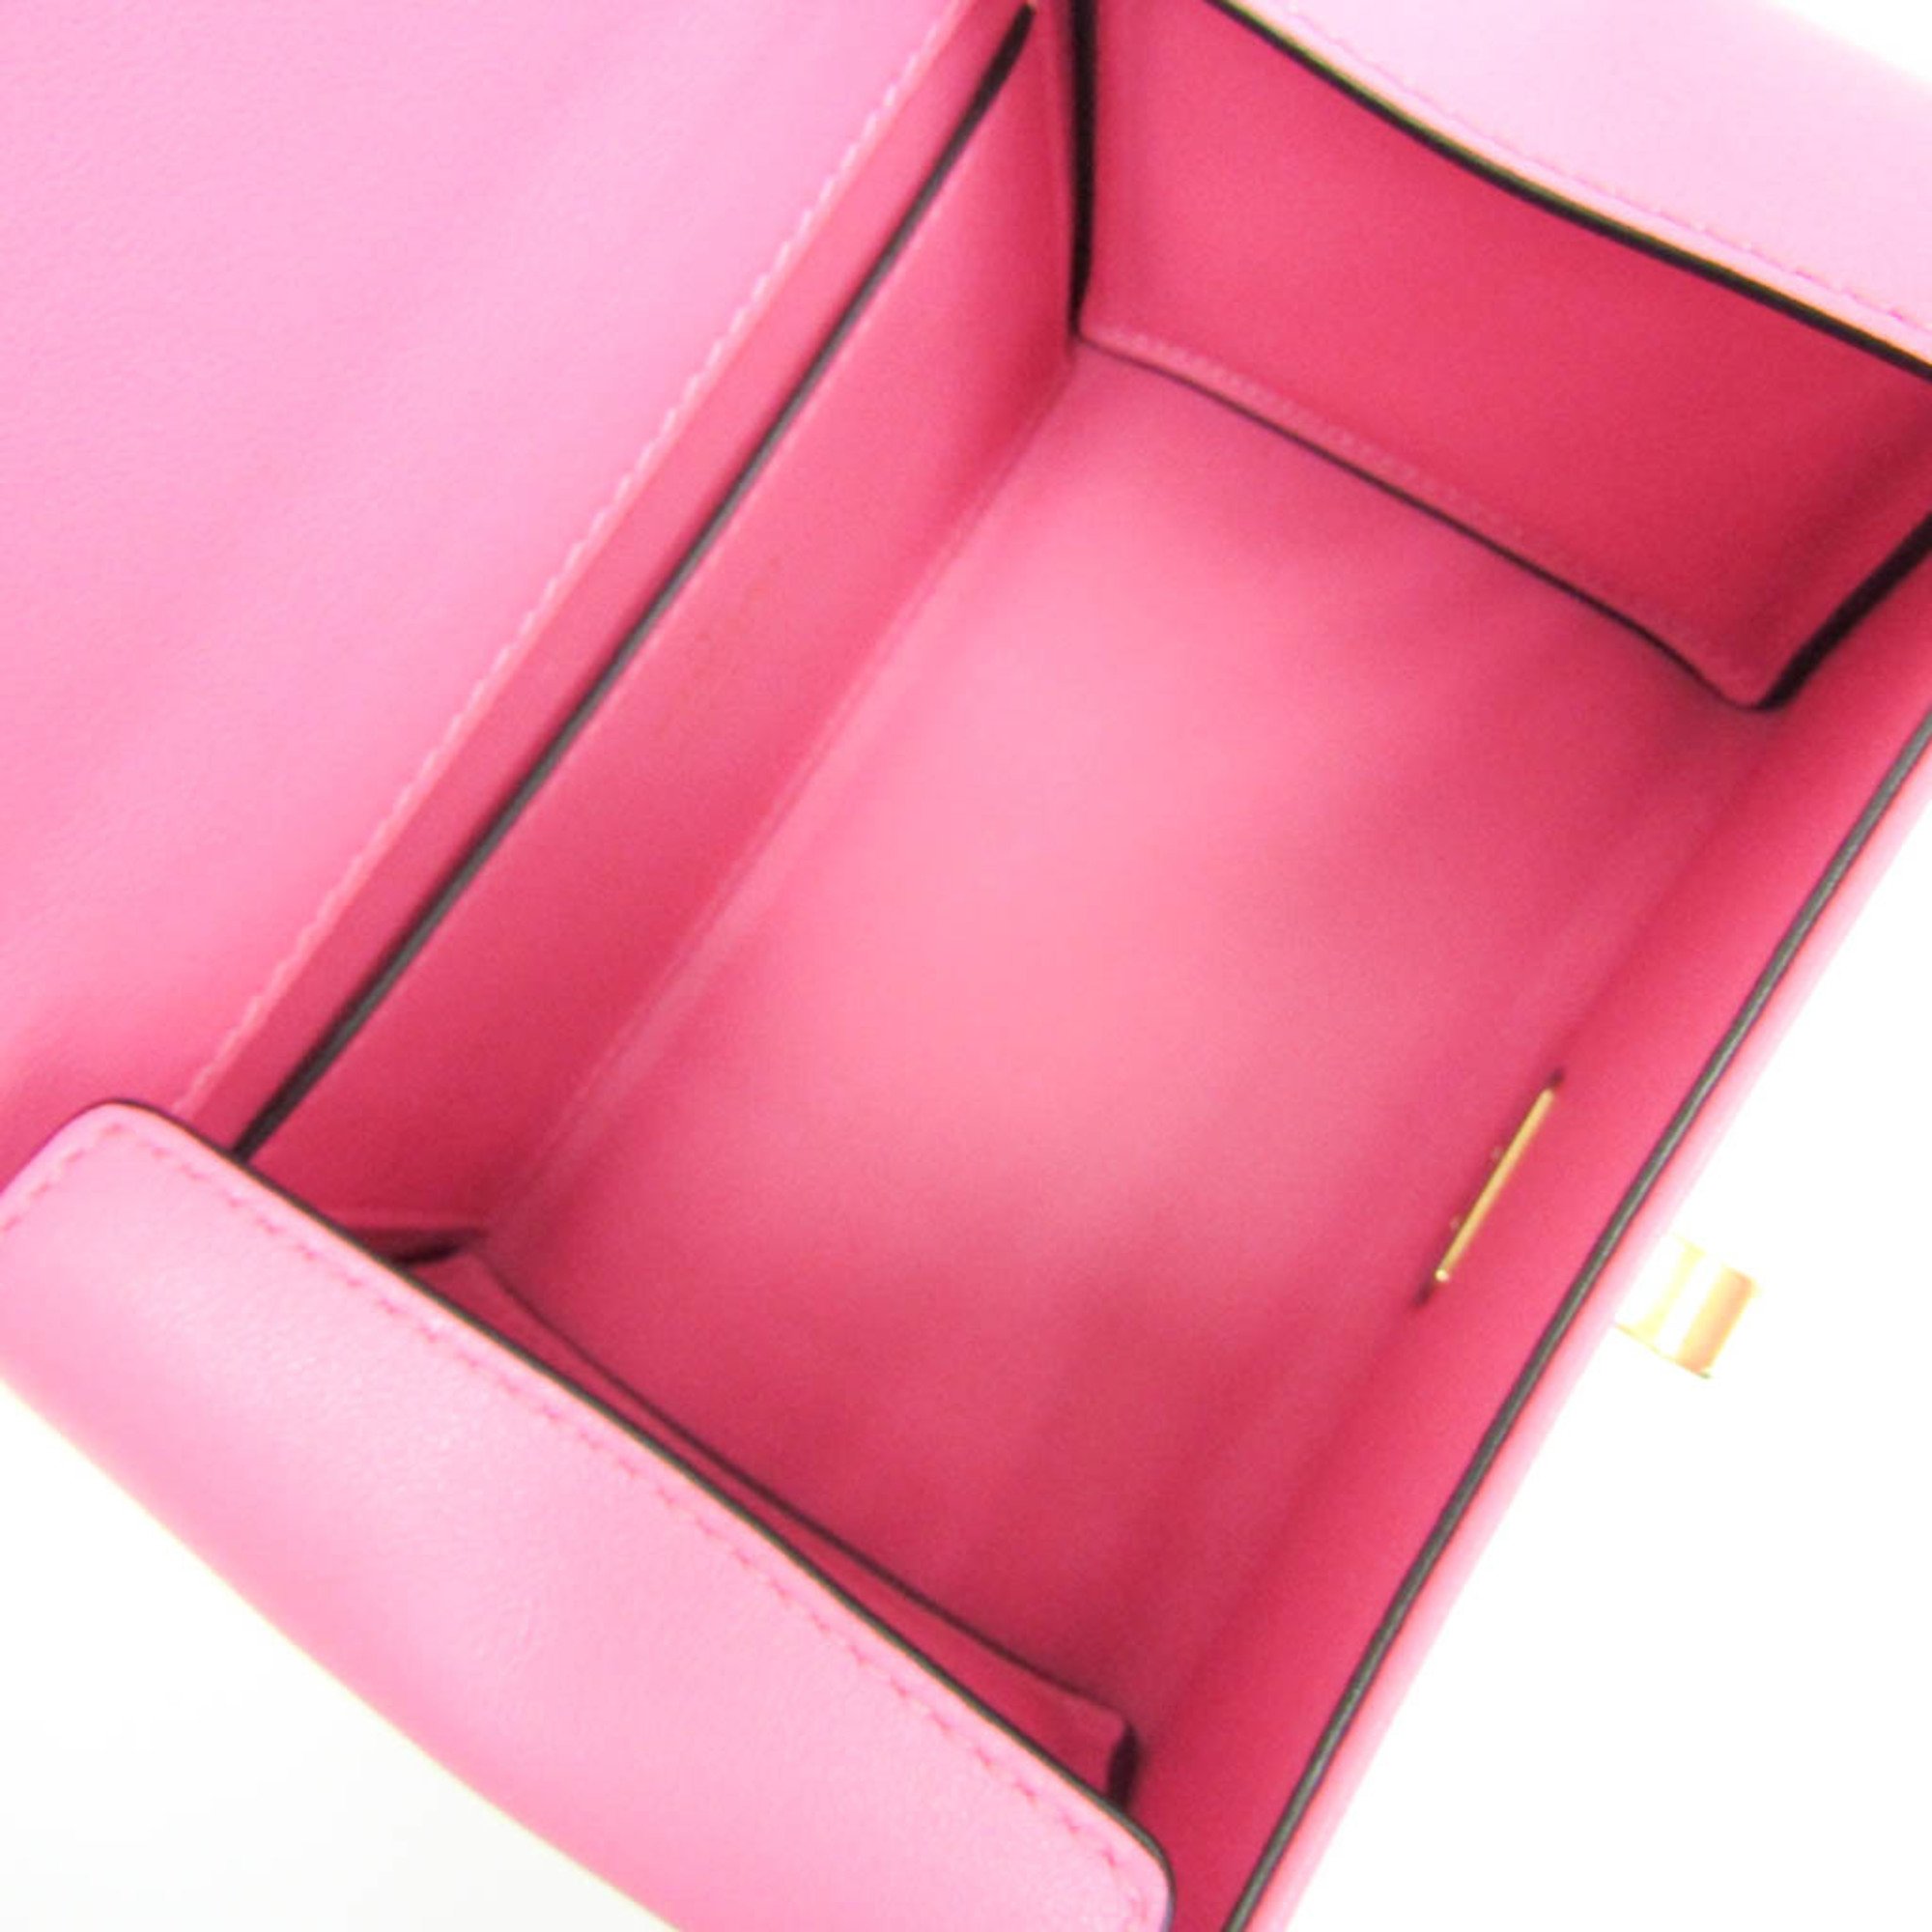 Valentino Garavani Vlogo Signature XW2B0K29ZXL Women's Leather Handbag,Shoulder Bag Pink